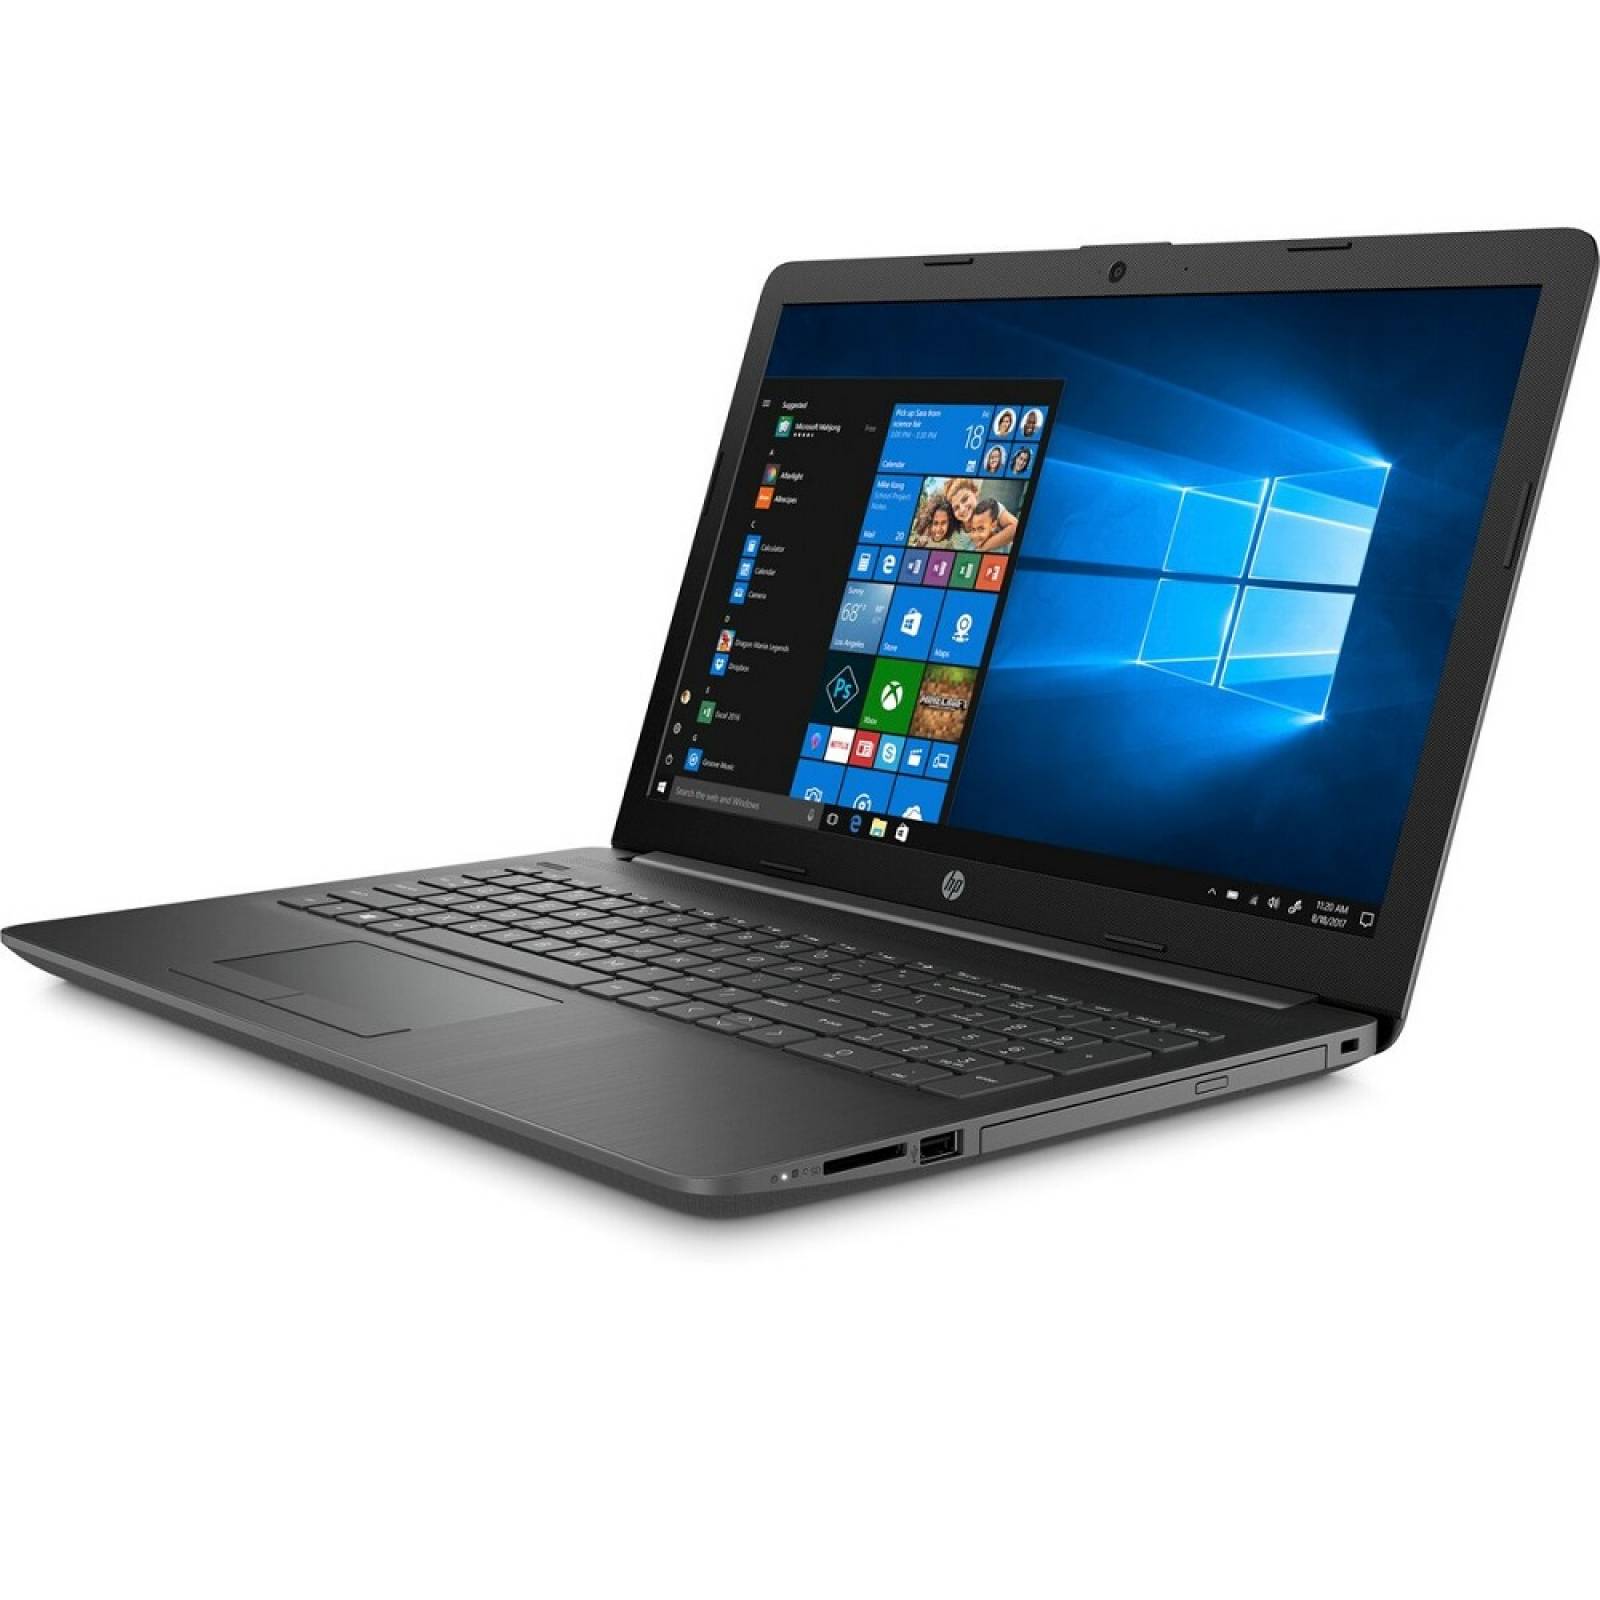 Laptop HP AMD Ryzen 5 3500U 1TB 8GB Touch DVD-RW 15-DB1040 - Reacondicionado